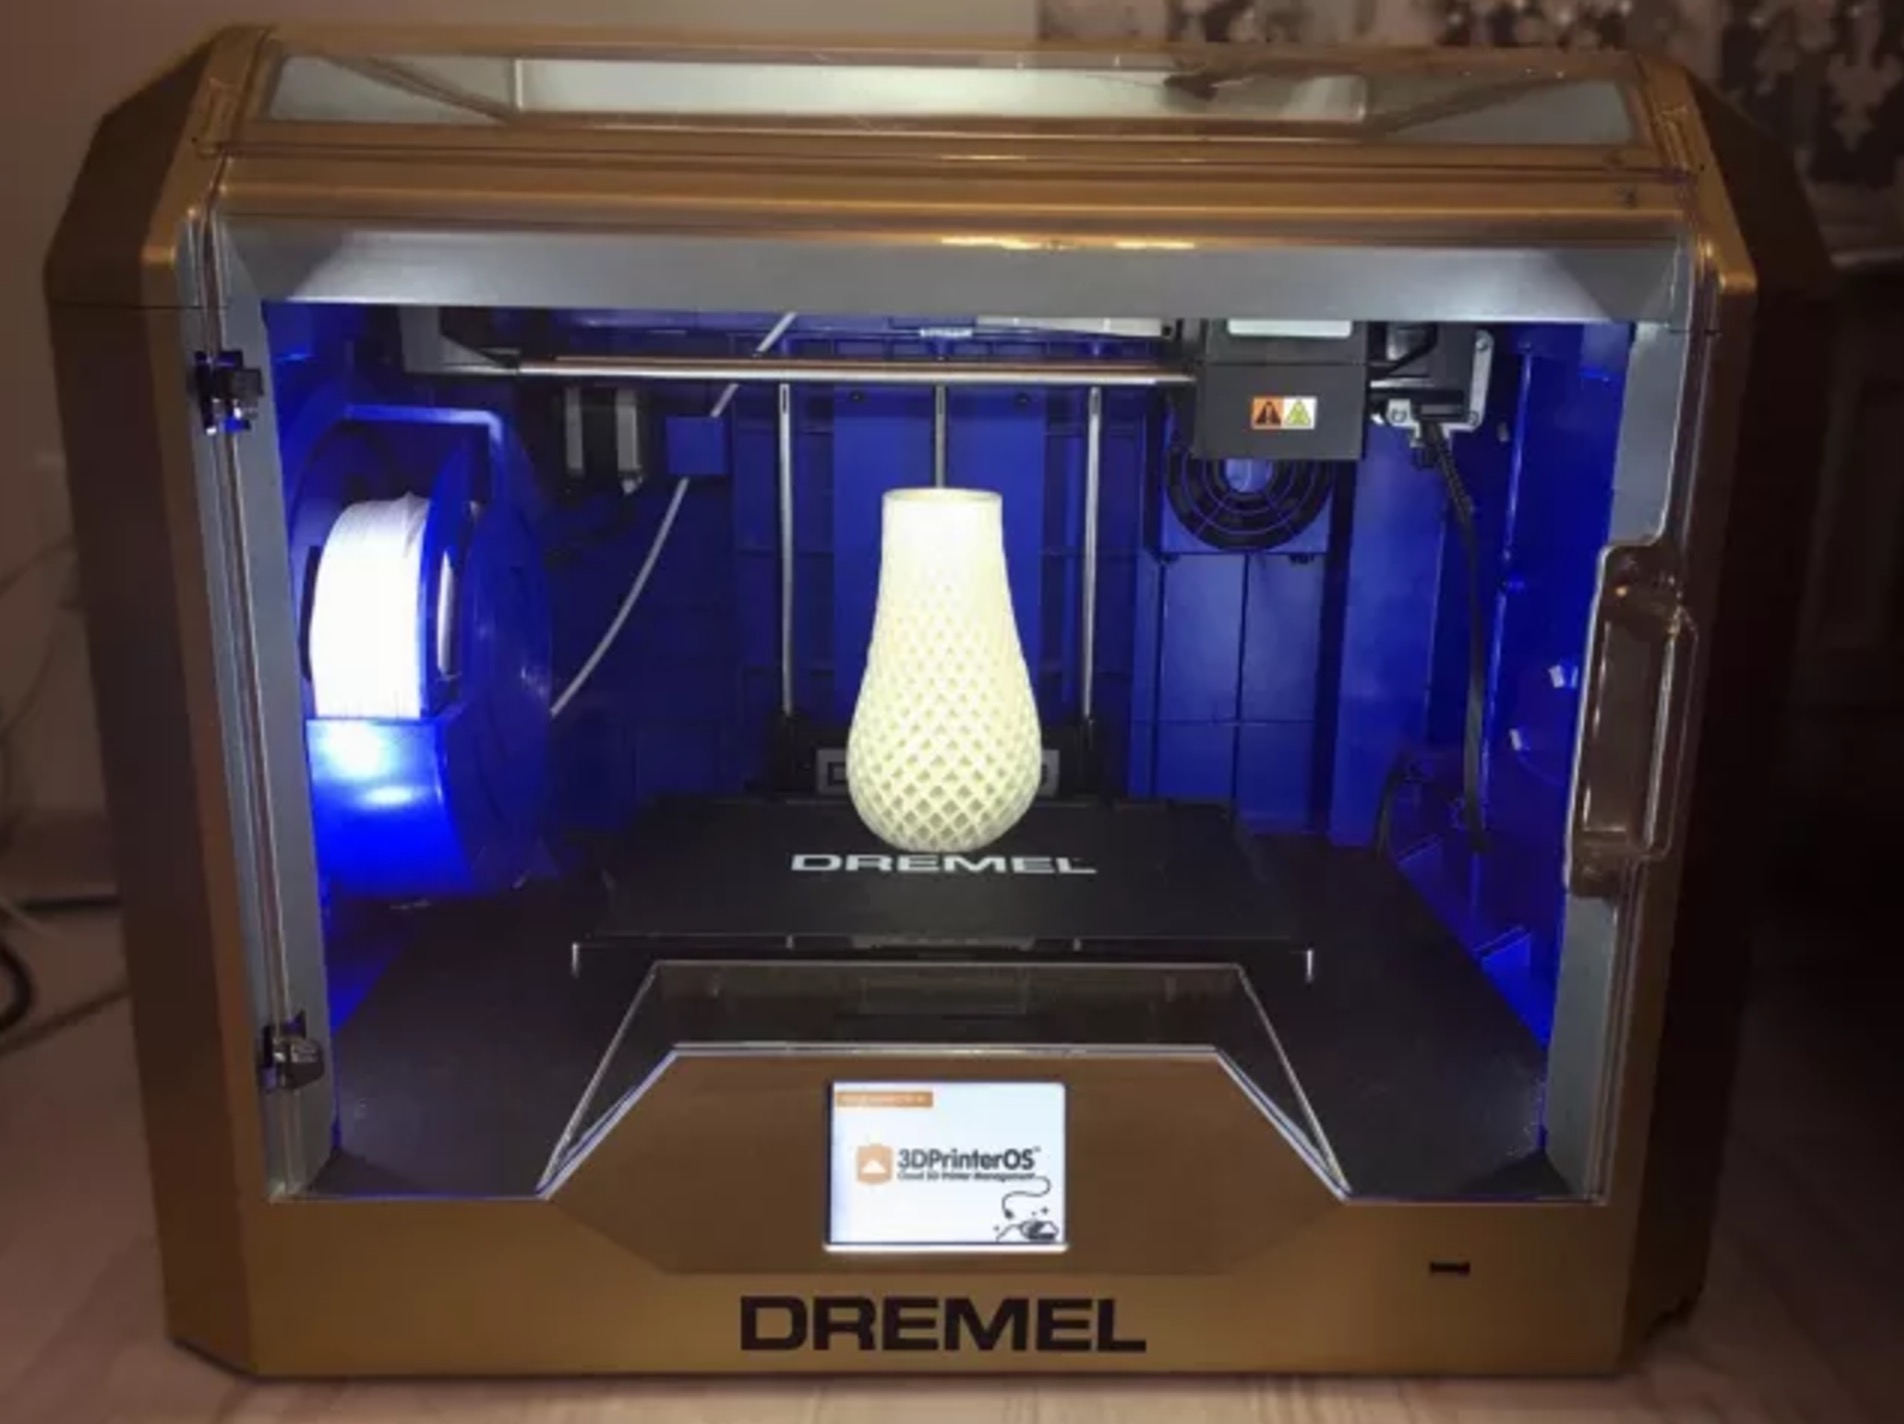  Dremel and 3D Printer OS team up 